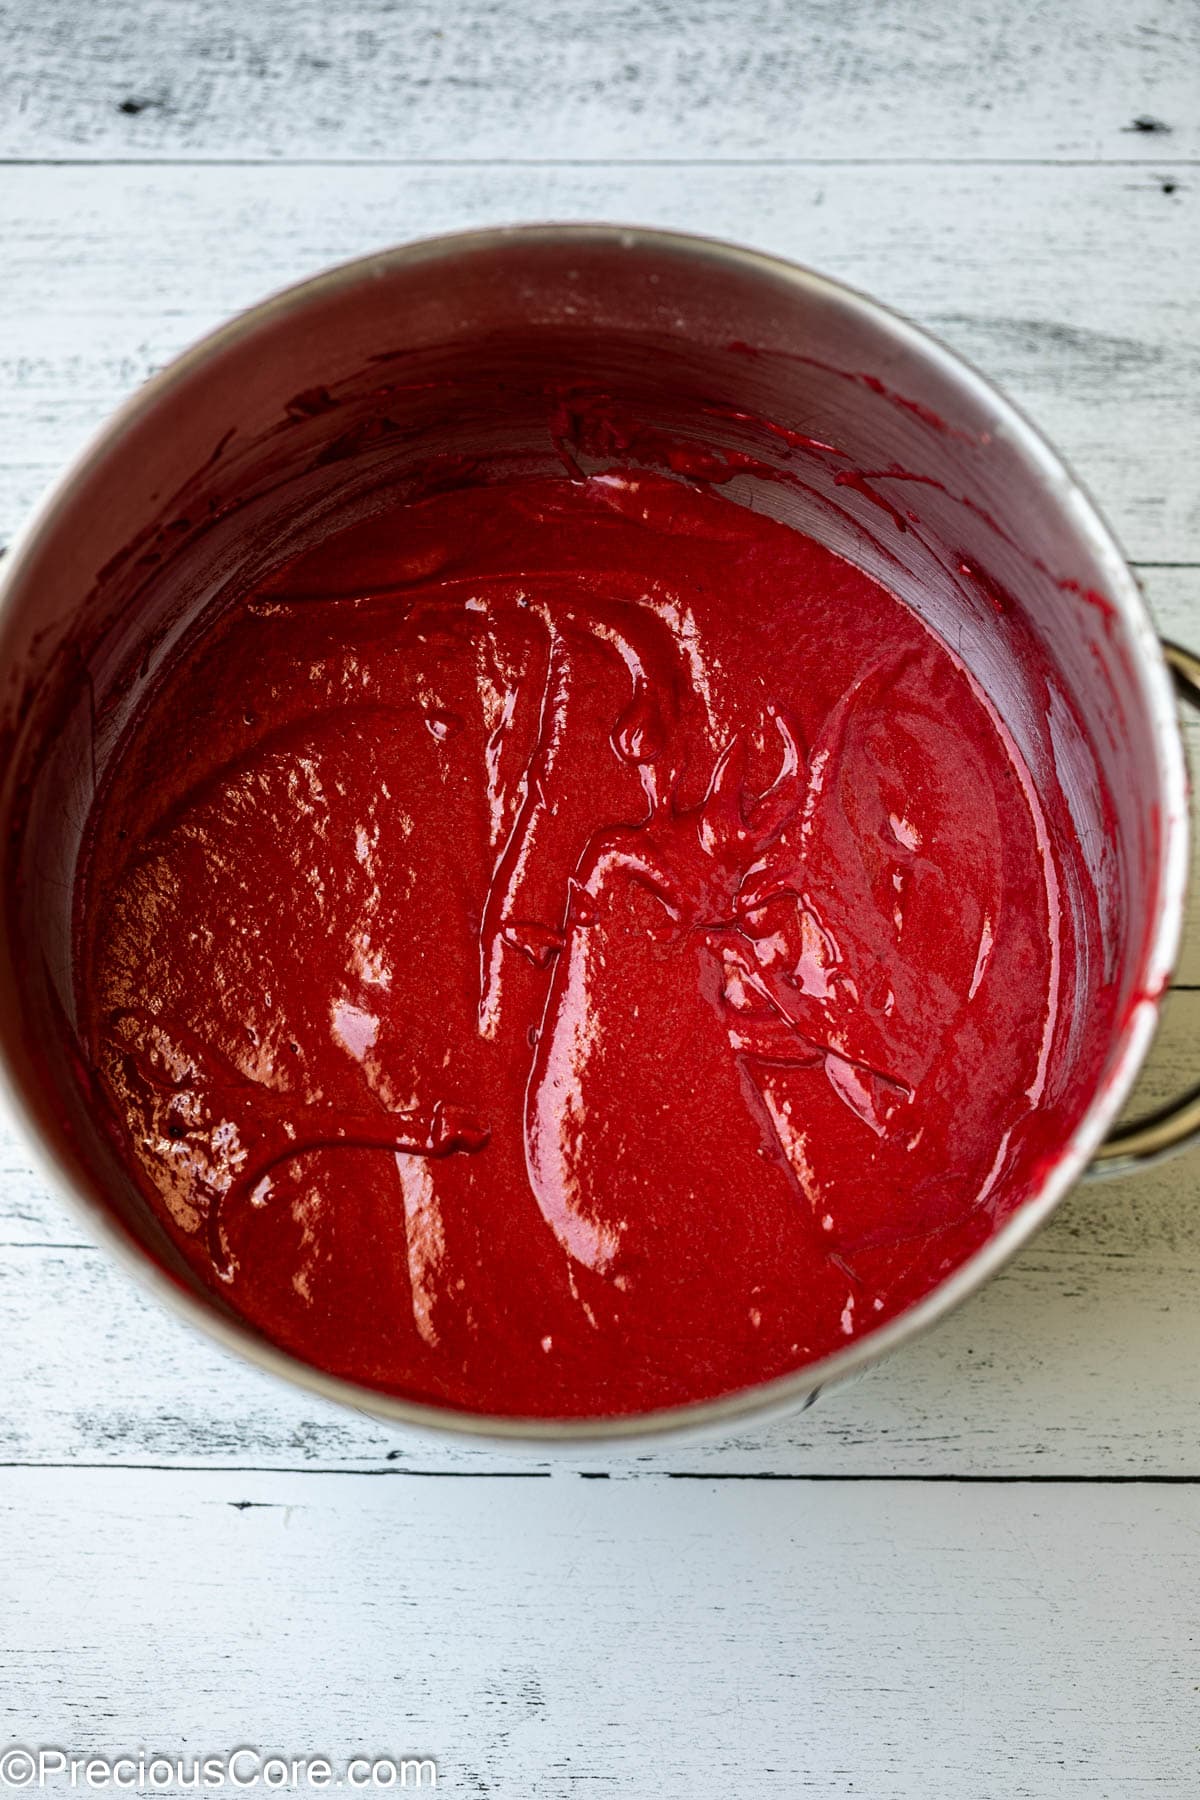 Red velvet cake recipe without buttermilk batter.